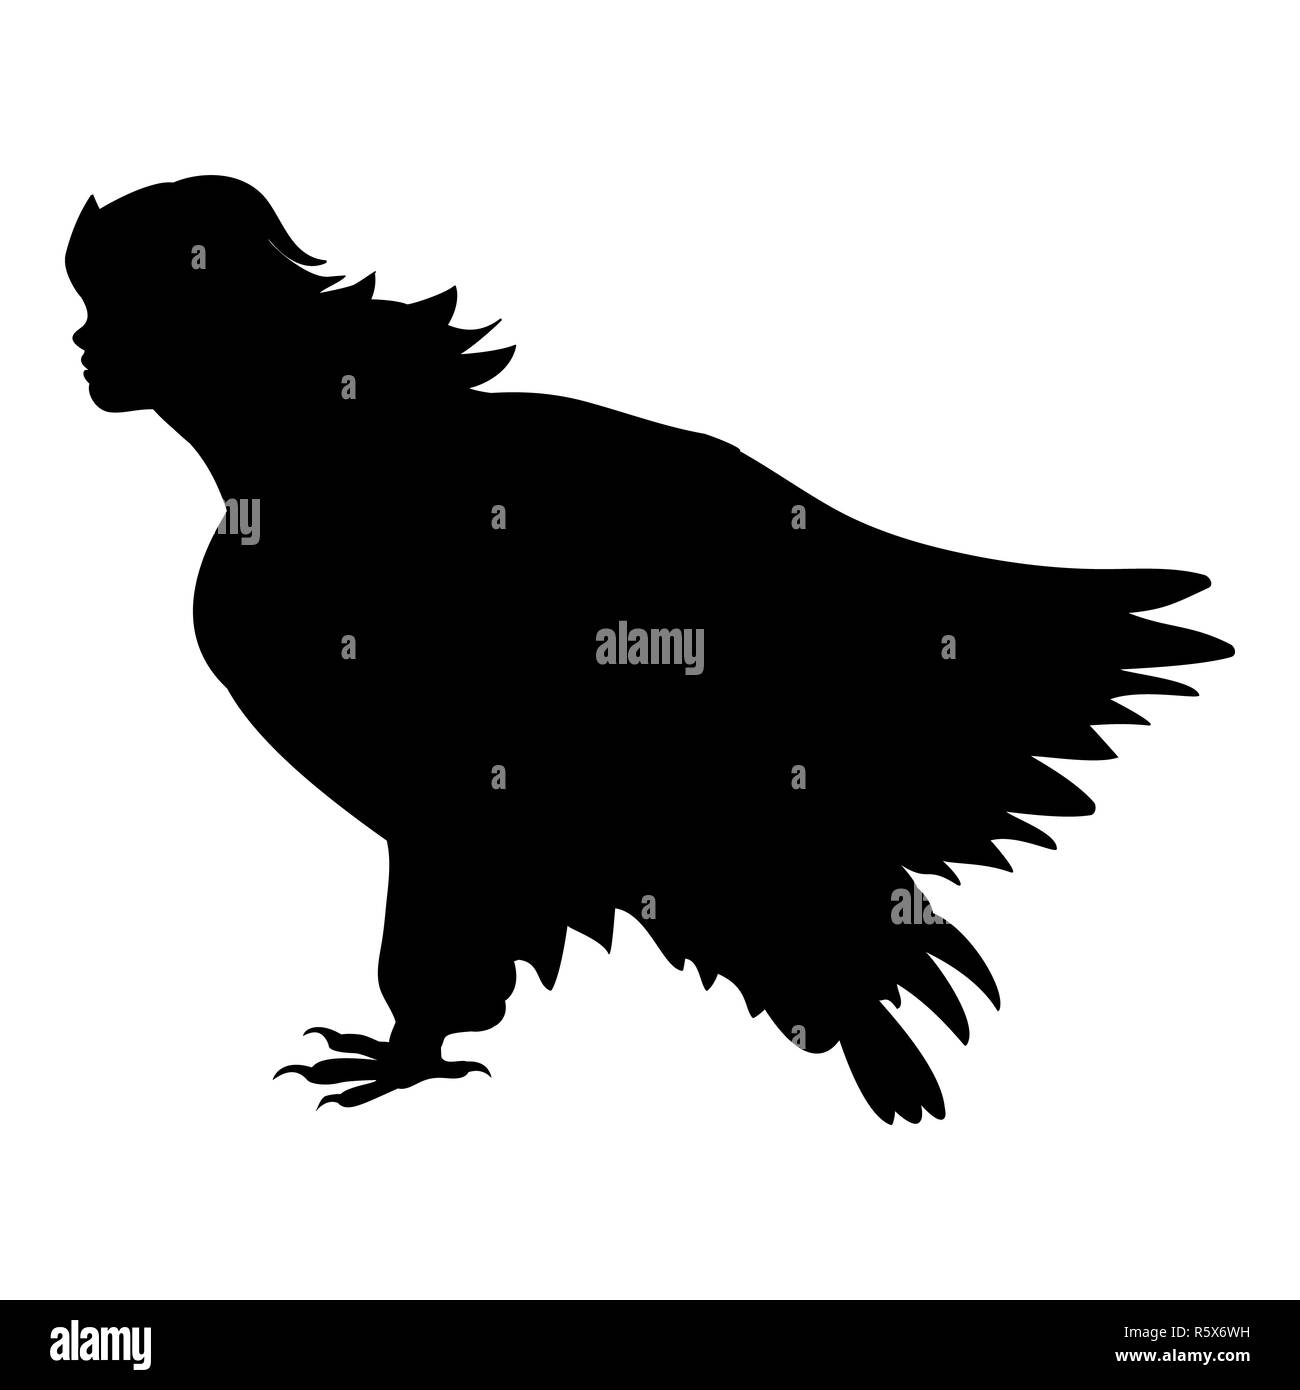 Sirena bird silhouette ancient mythology fantasy Stock Photo